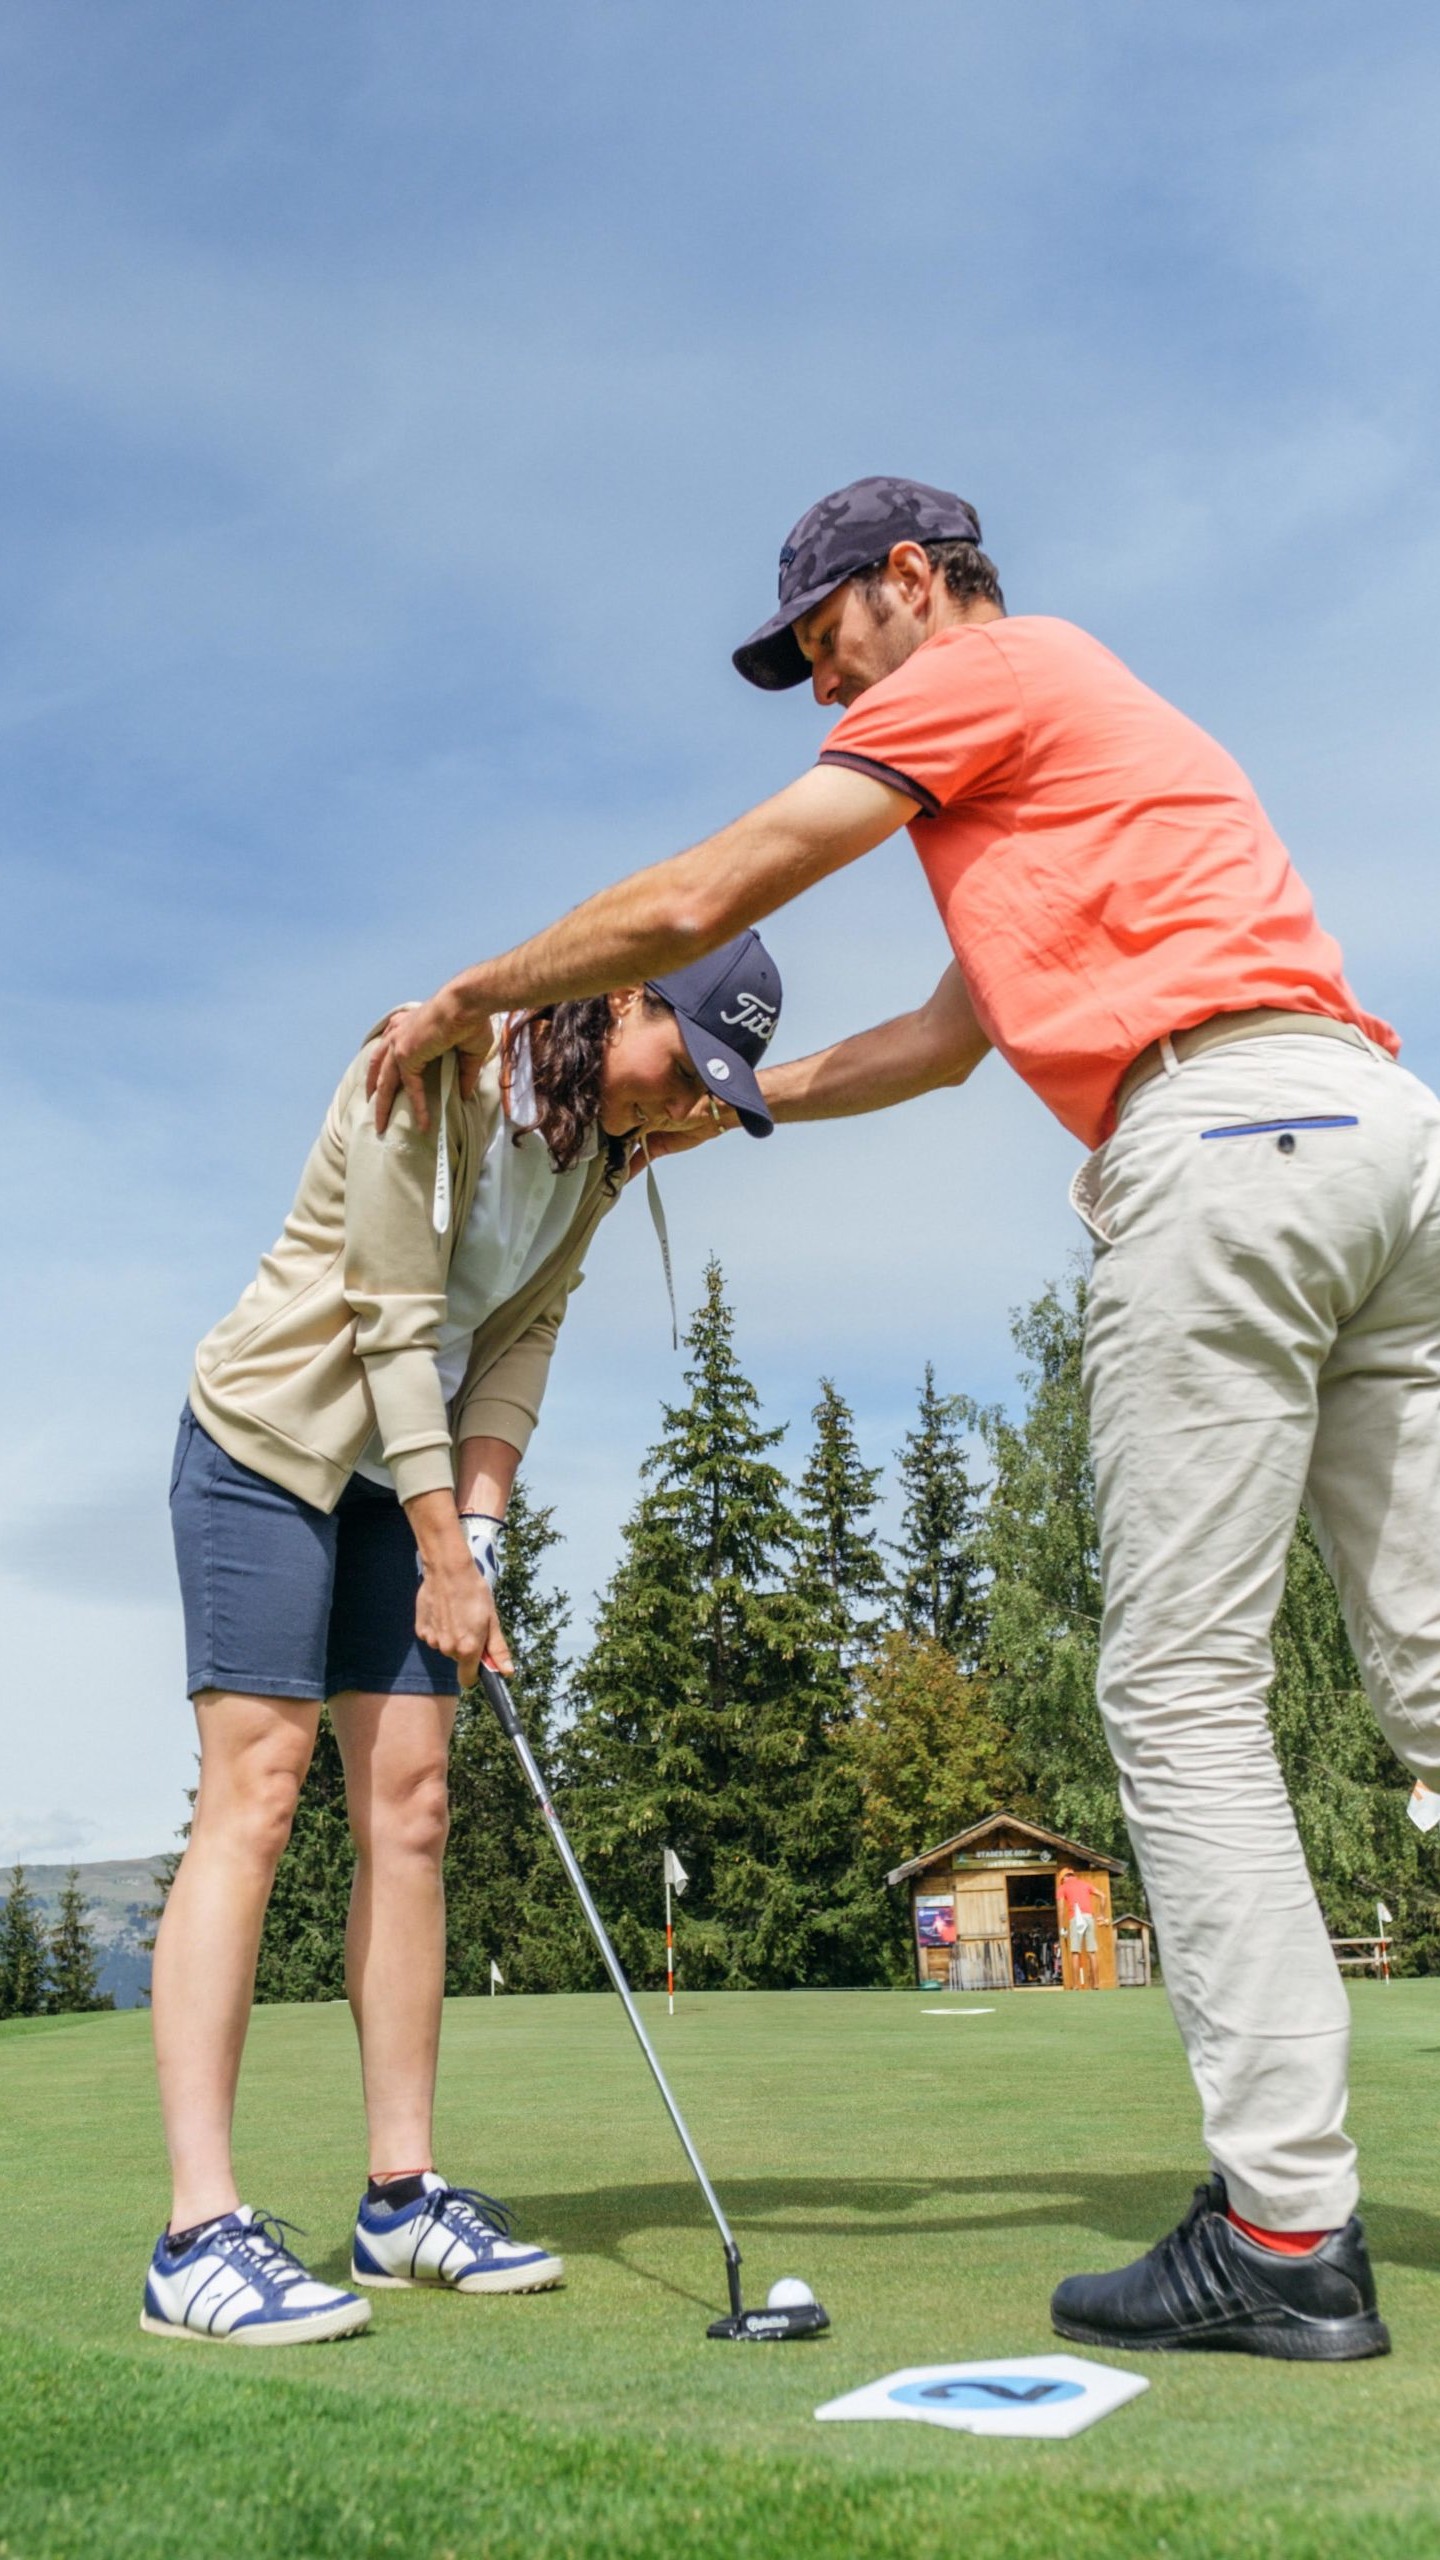 Stages de golf individuel putting au golf club de Courchevel | Matthieu Billaud Professeur de golf